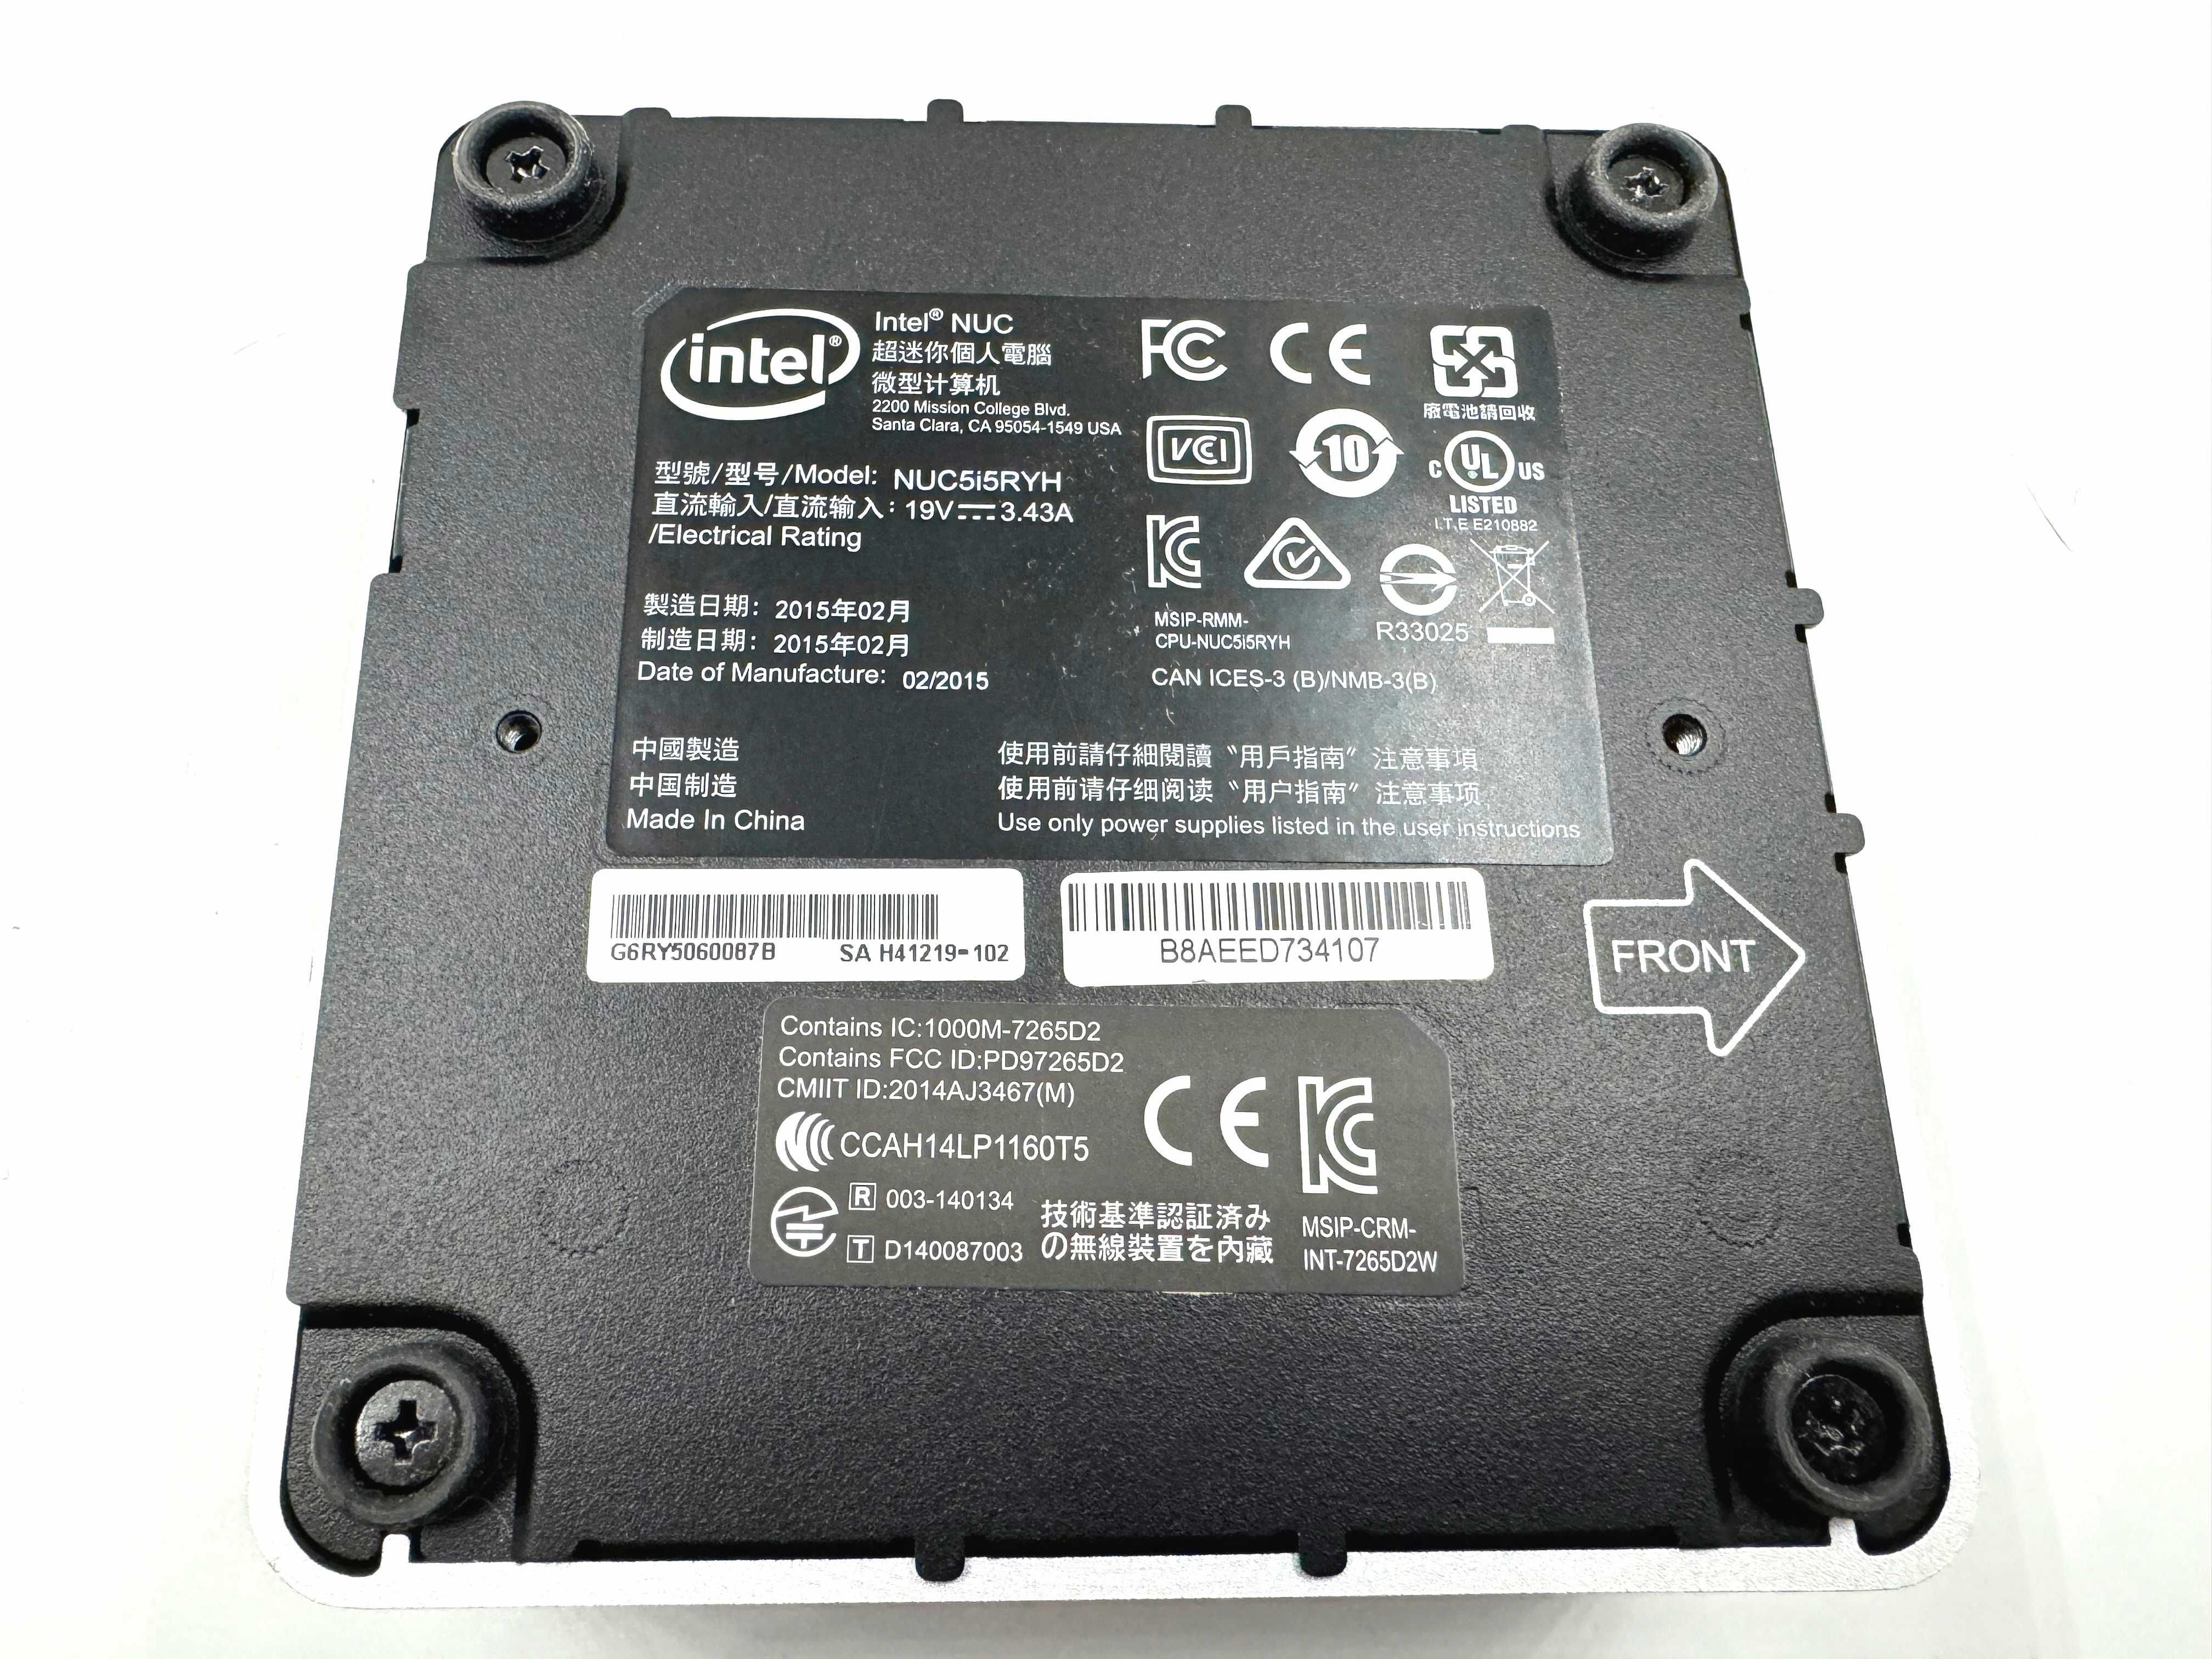 Мини-пк Intel NUC i5-5250u 4gb/128gb; wifi, bt, 2.5 корзина